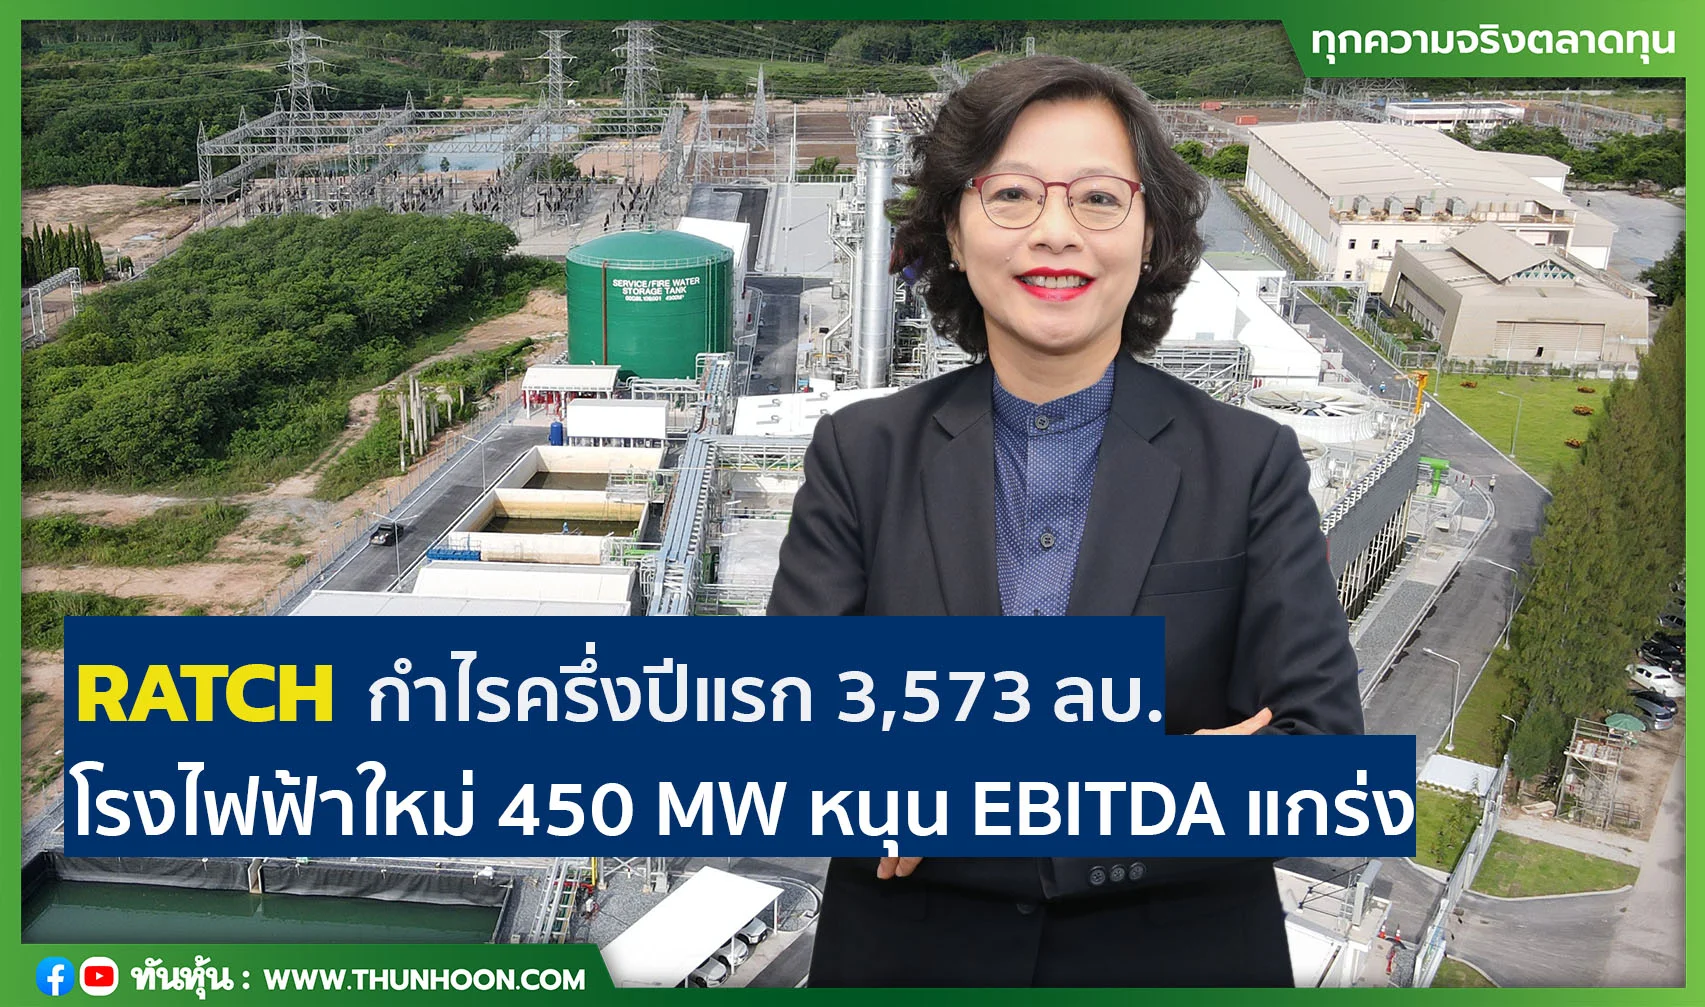 RATCH กำไรครึ่งปีแรก 3,573 ลบ. โรงไฟฟ้าใหม่ 450 MW หนุน EBITDA แกร่ง